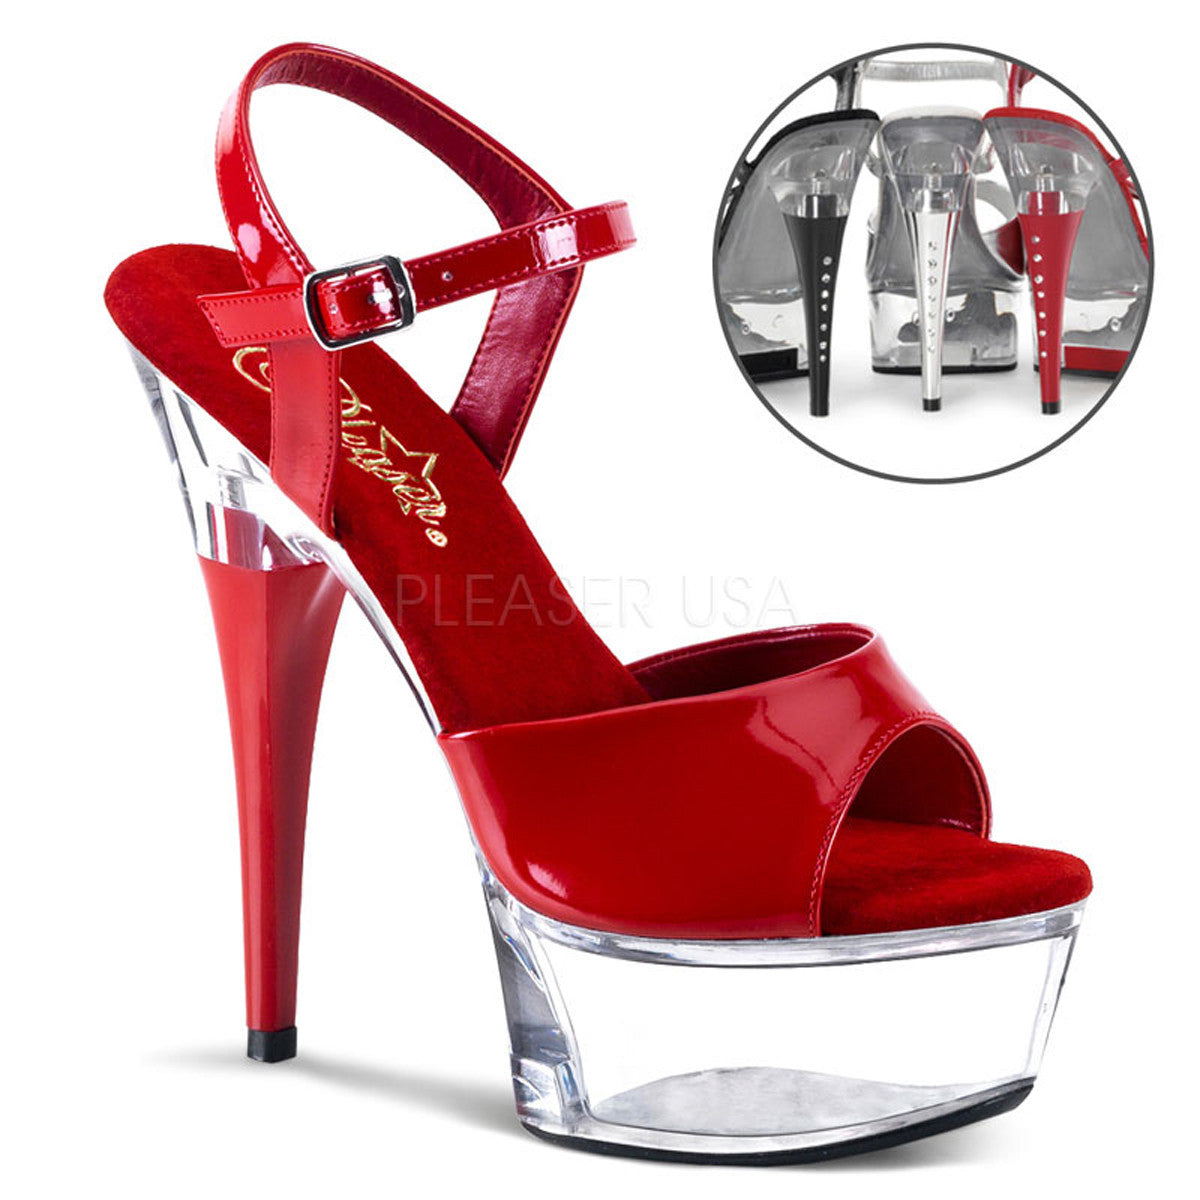 PLEASER CAPTIVA-609 Red Pat-Clear Ankle Strap Sandals - Shoecup.com - 1